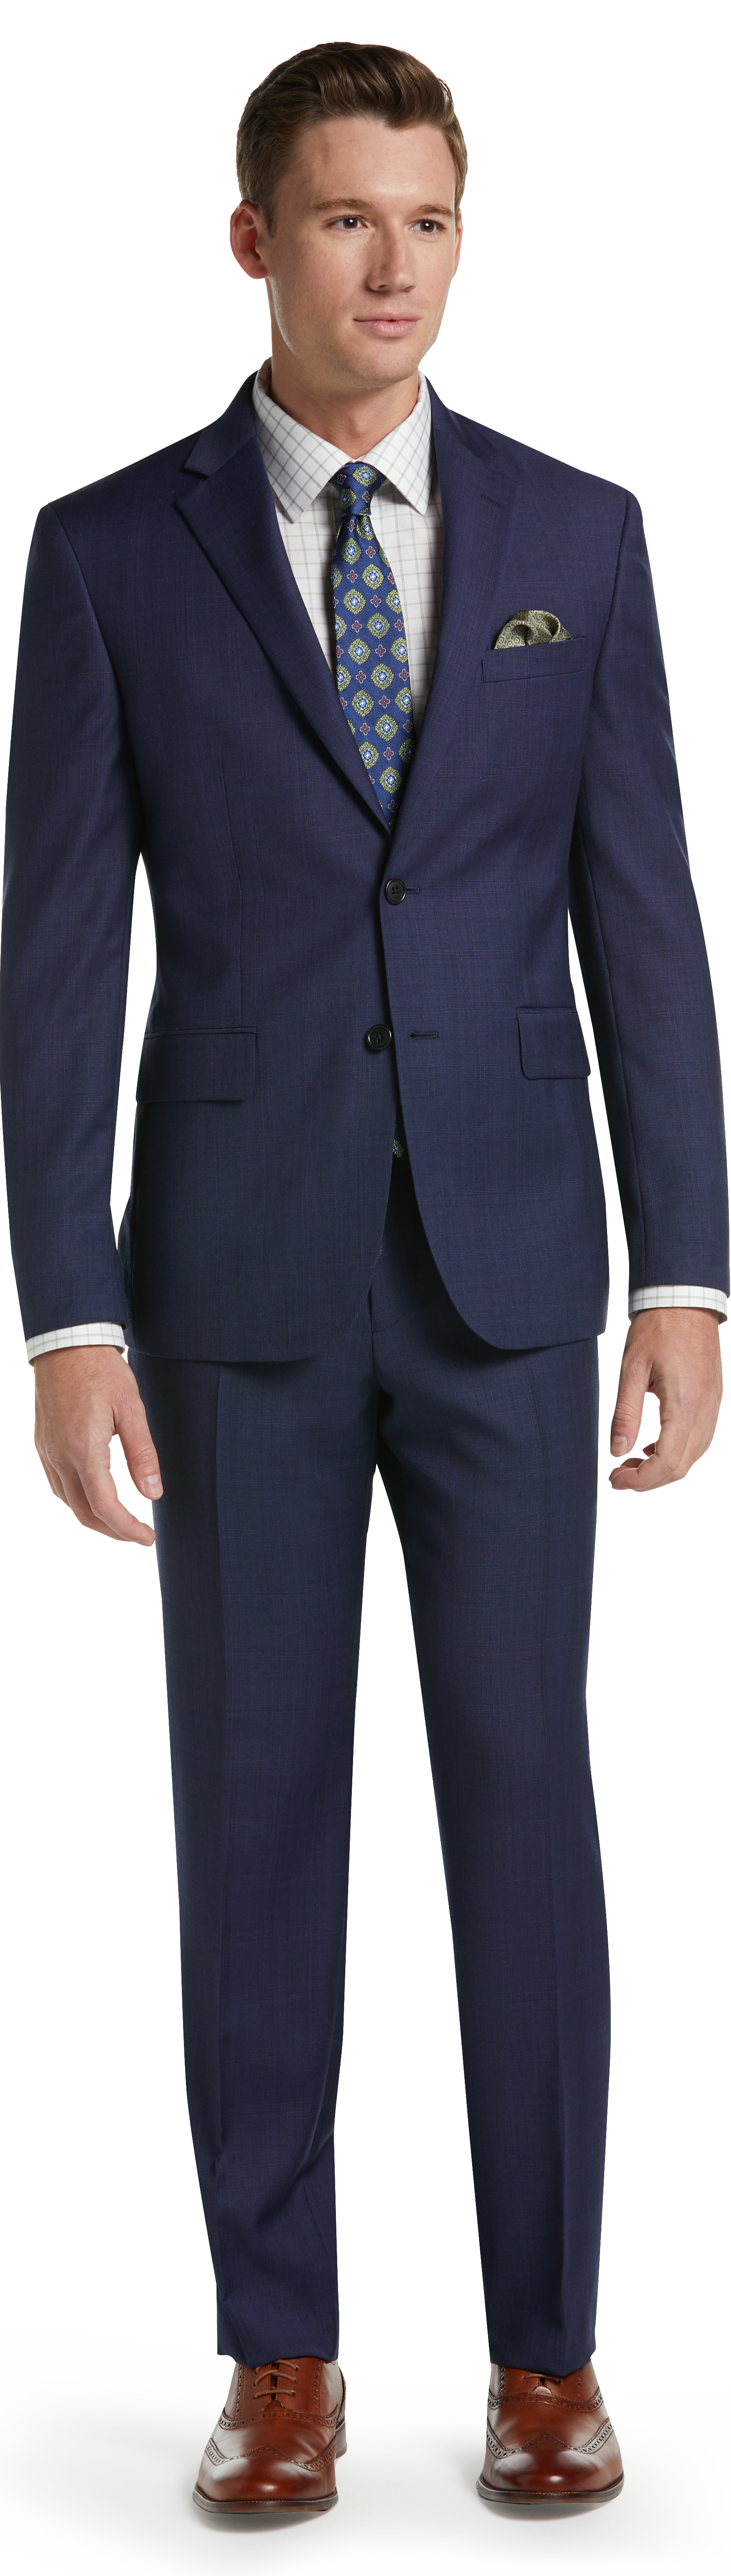 Executive Collection Tailored Fit Glen Plaid Suit - Executive Suits ...